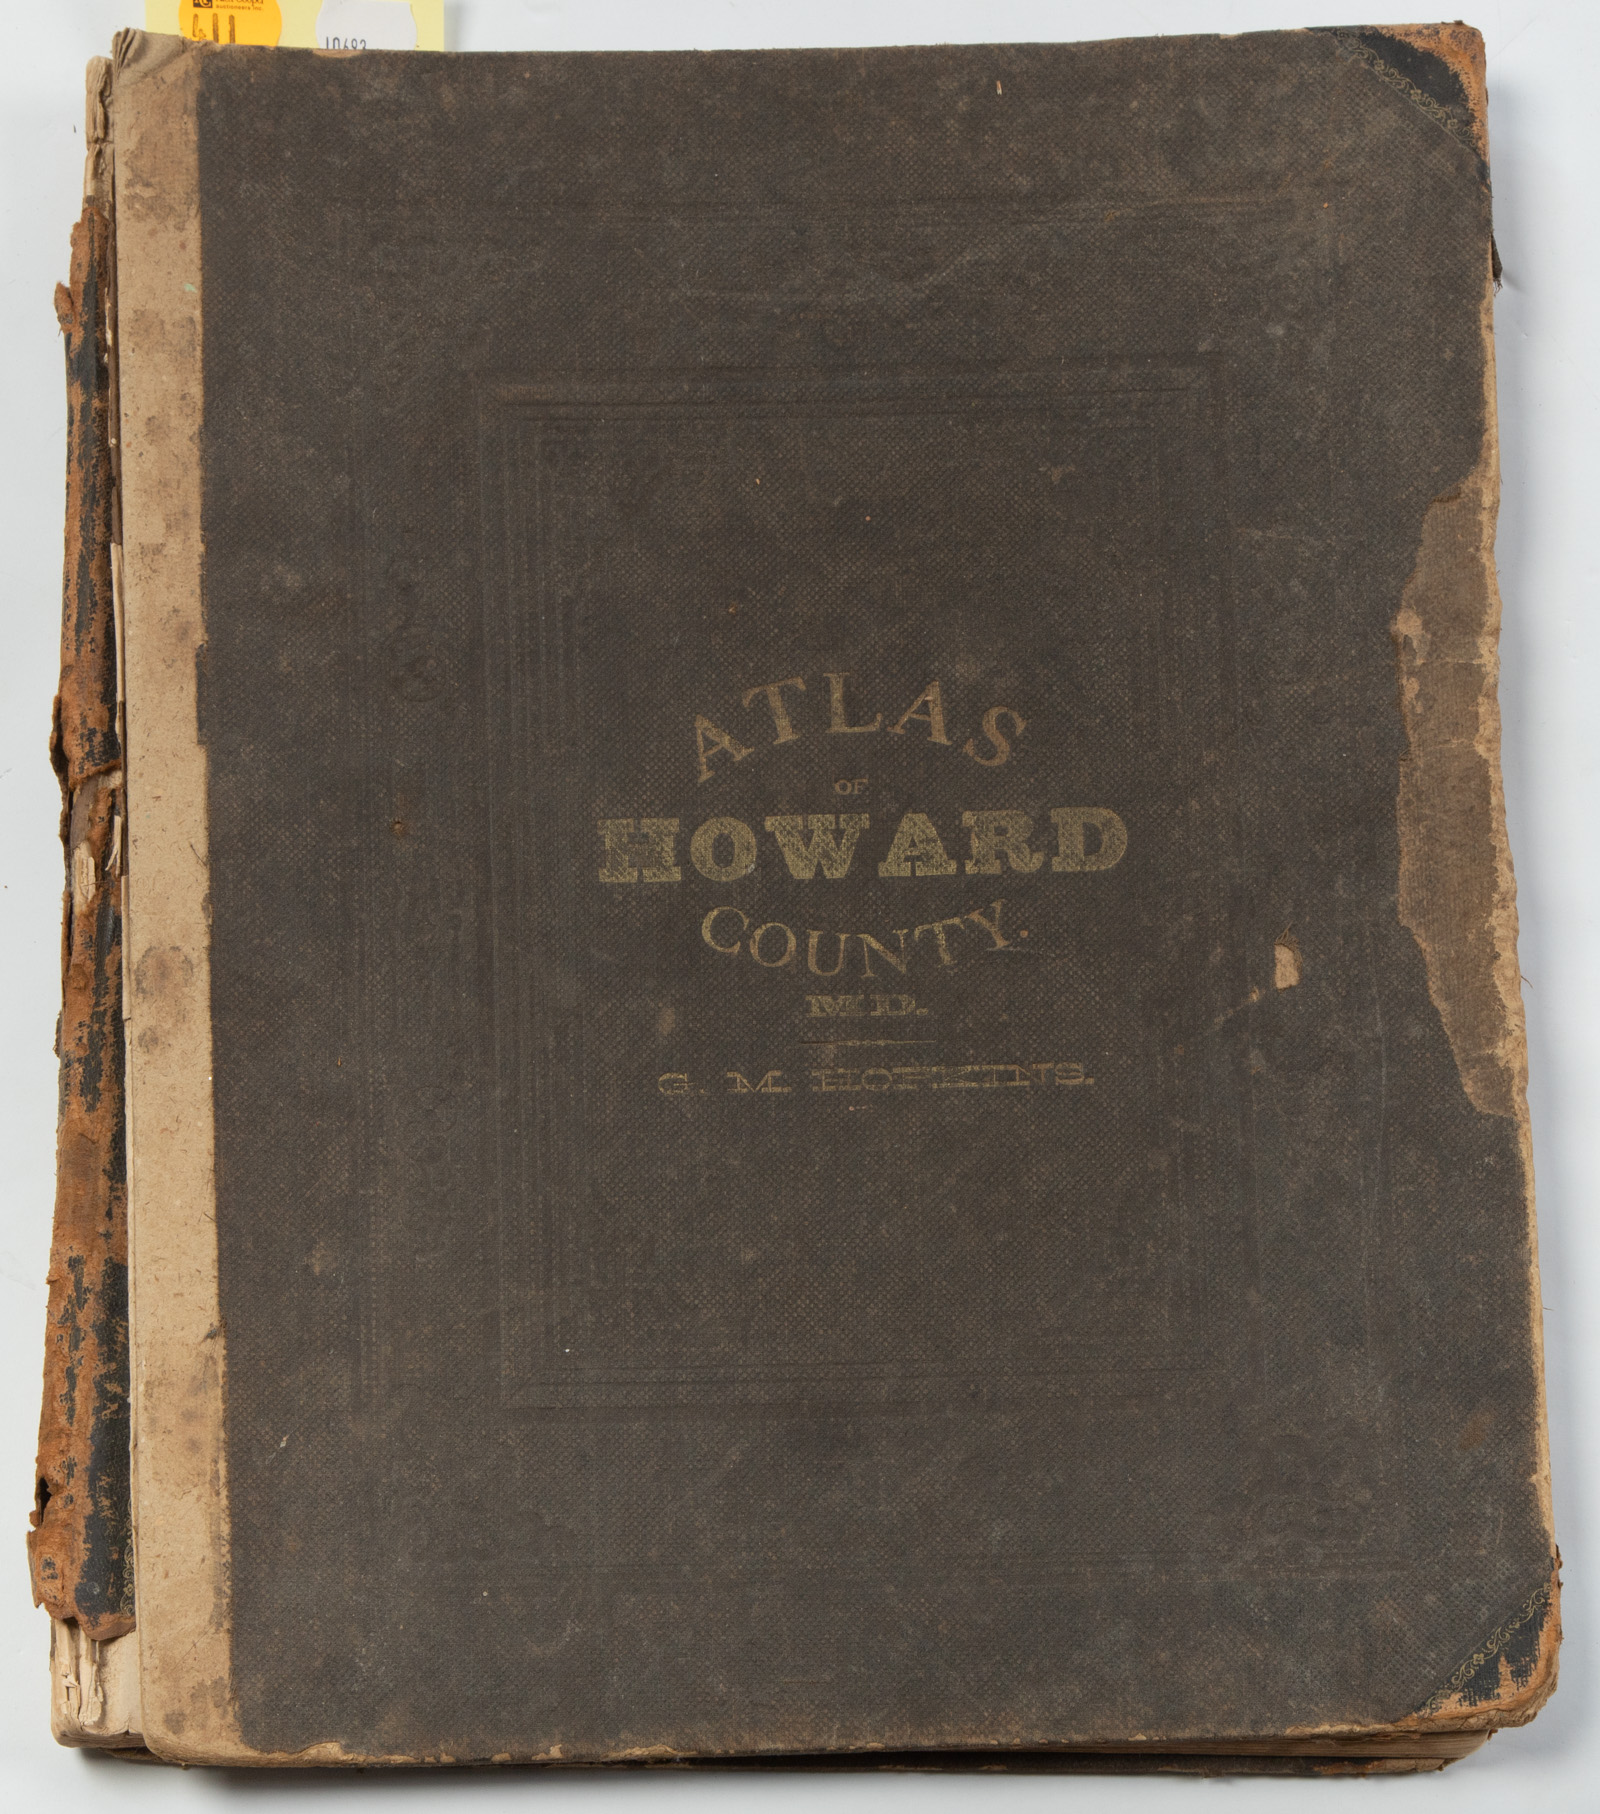 HOPKINS, ATLAS OF…HOWARD COUNTY, 1878